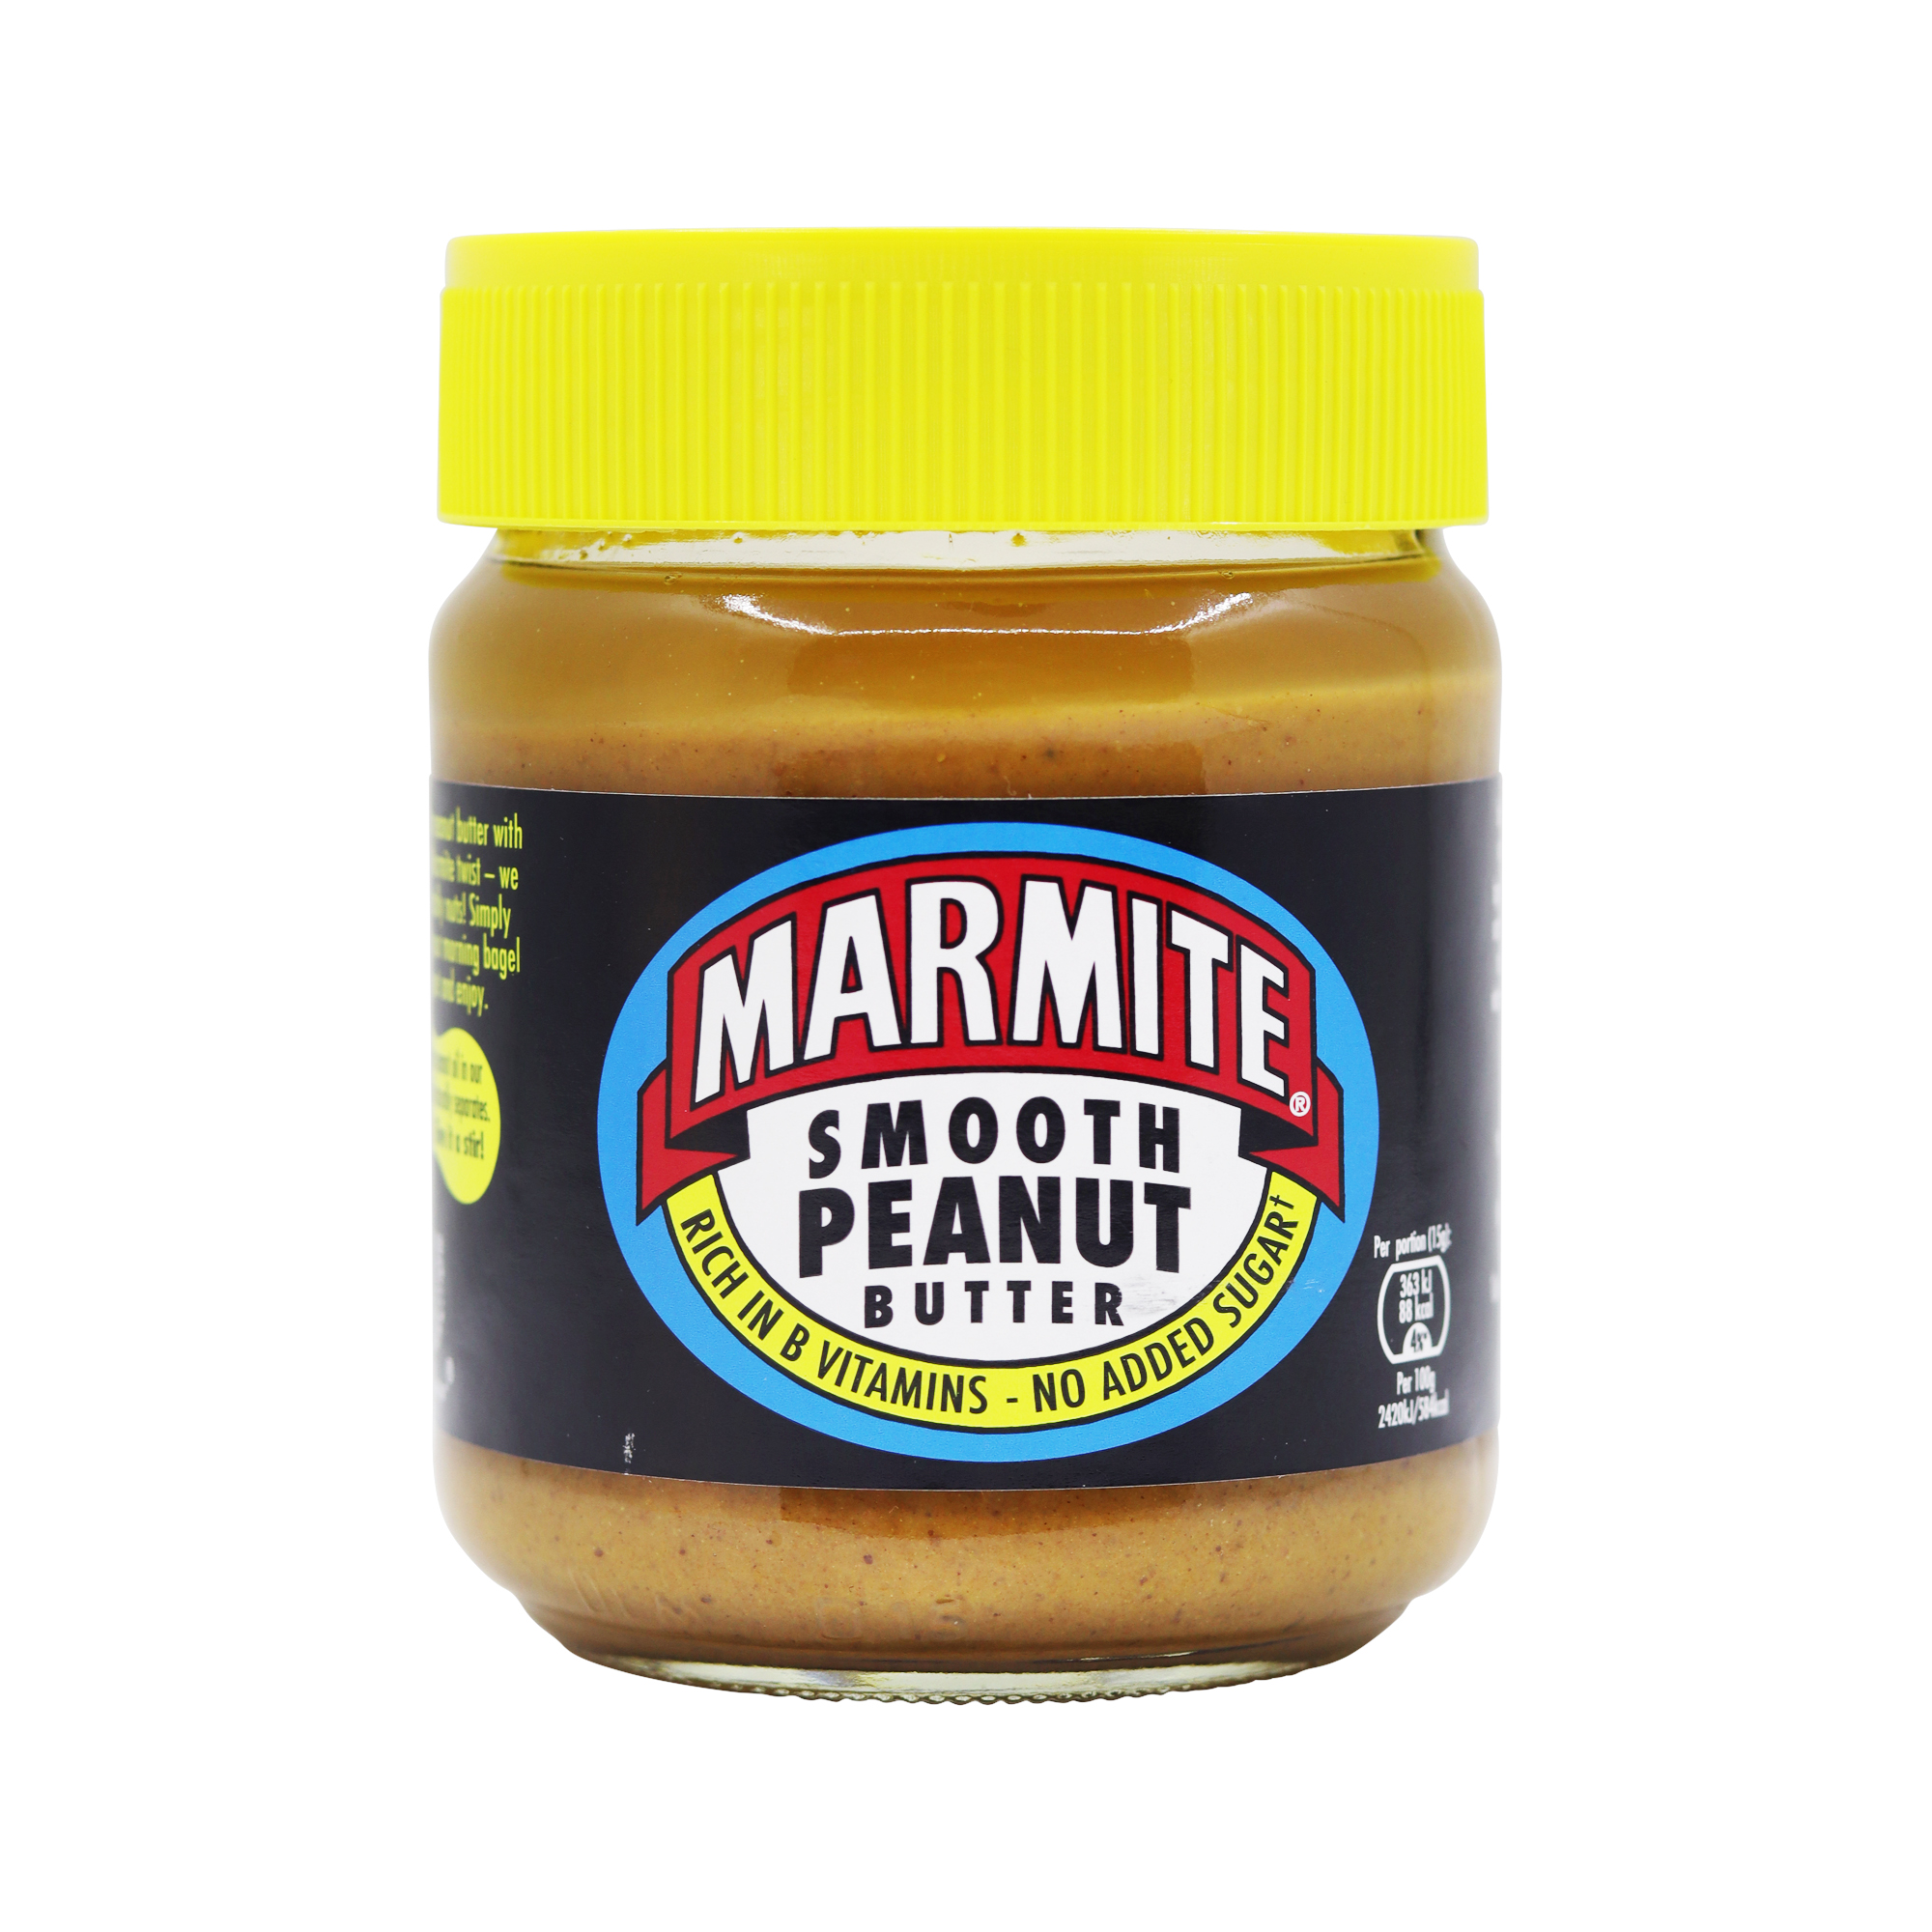 Marmite Smooth Peanut Butter Jar (225g)